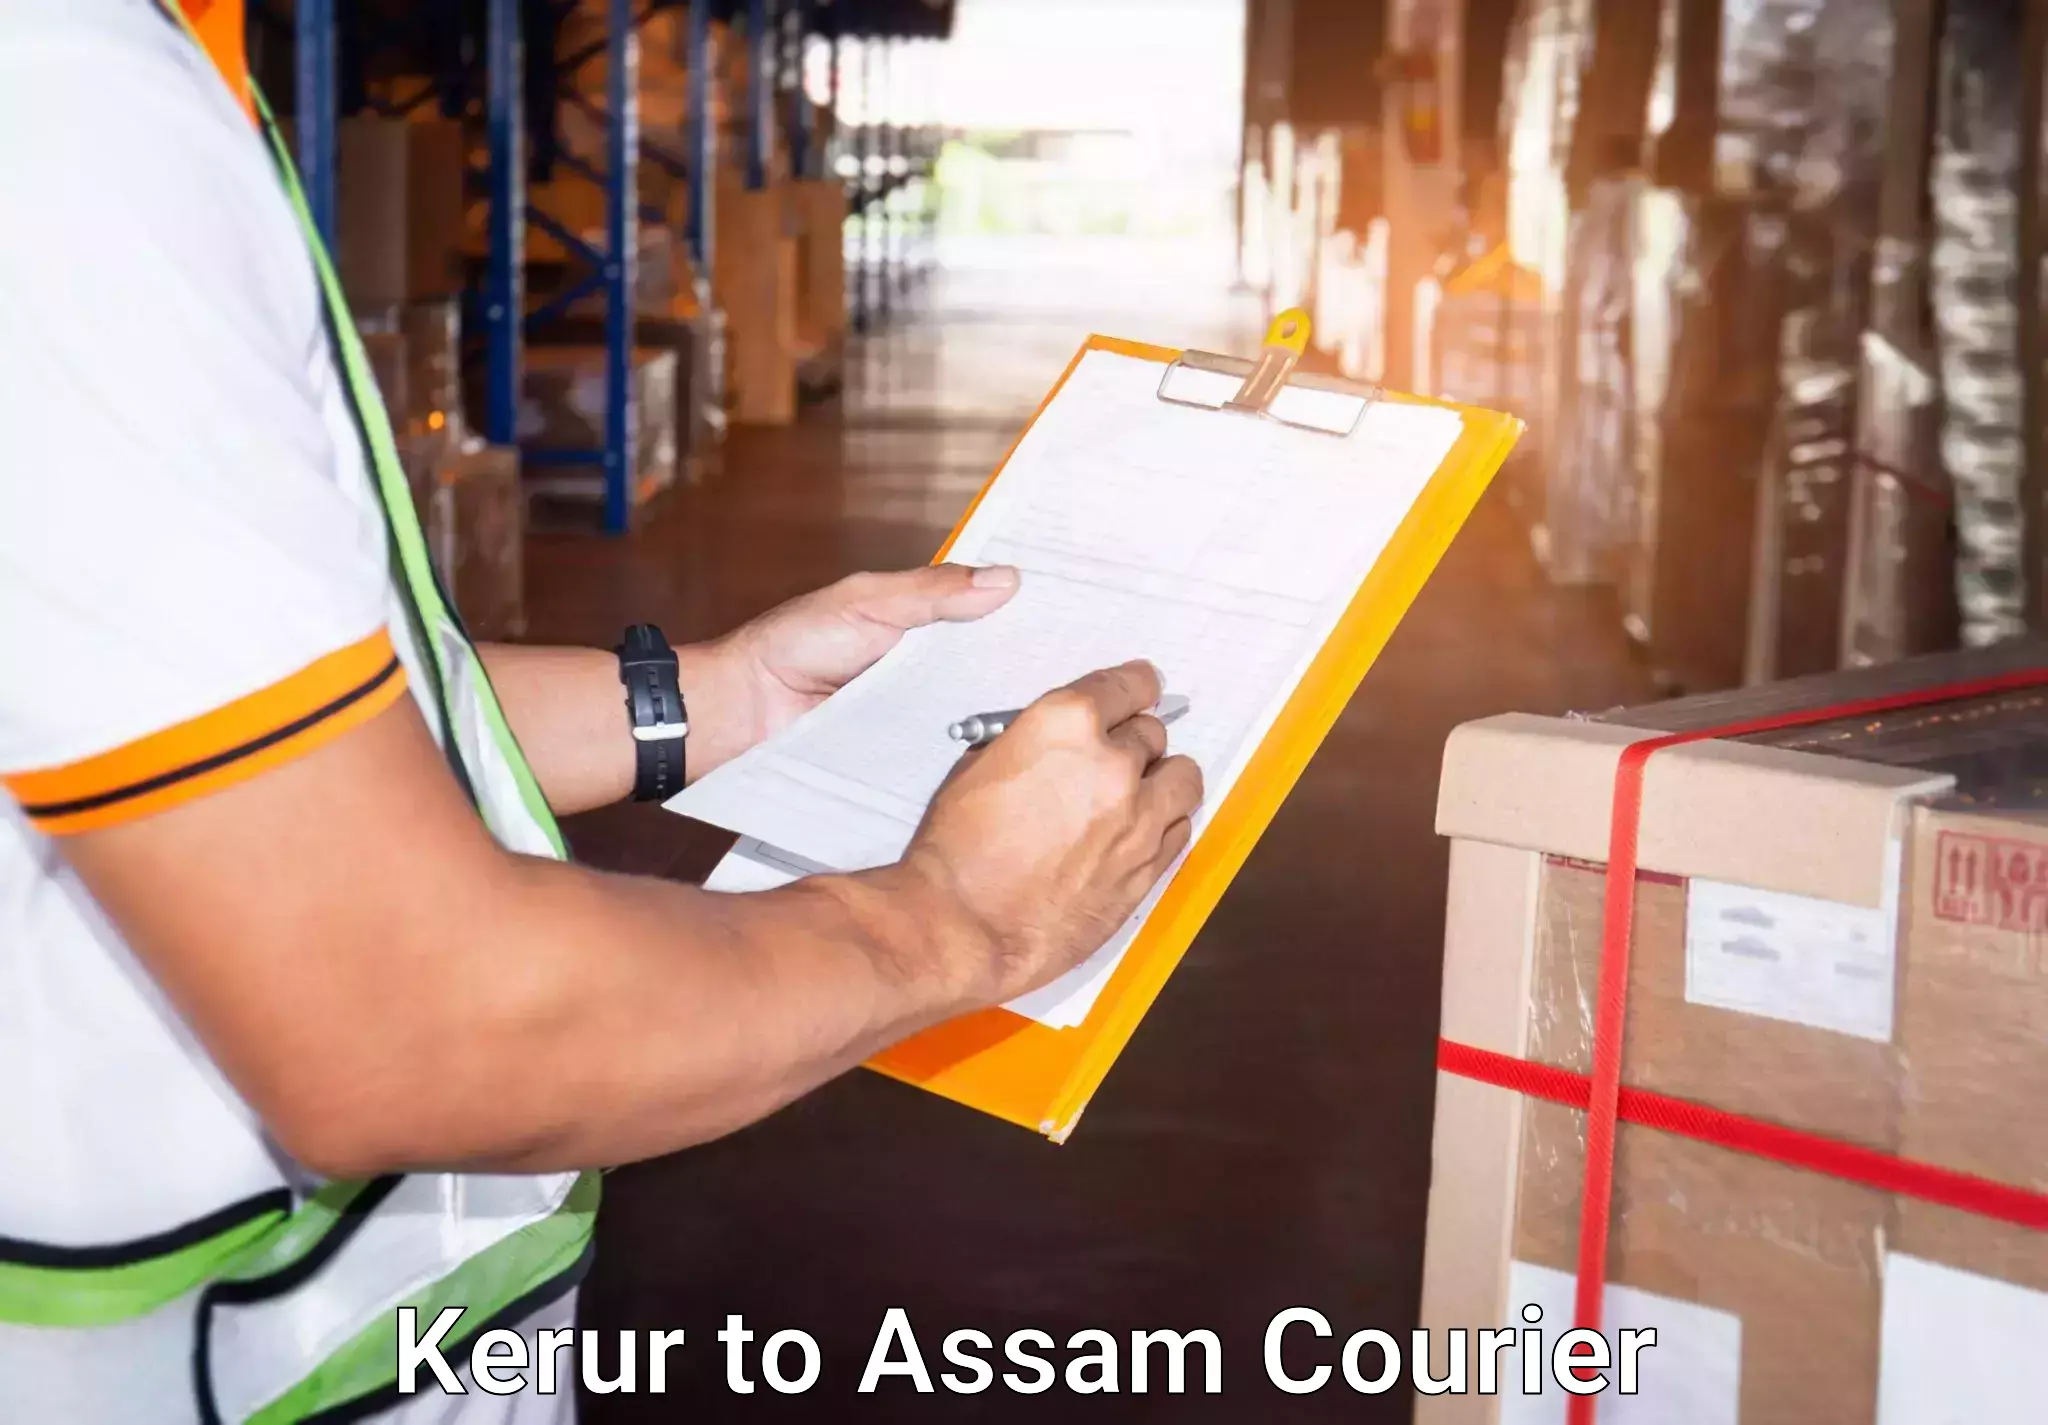 Urgent luggage shipment in Kerur to Thelamara